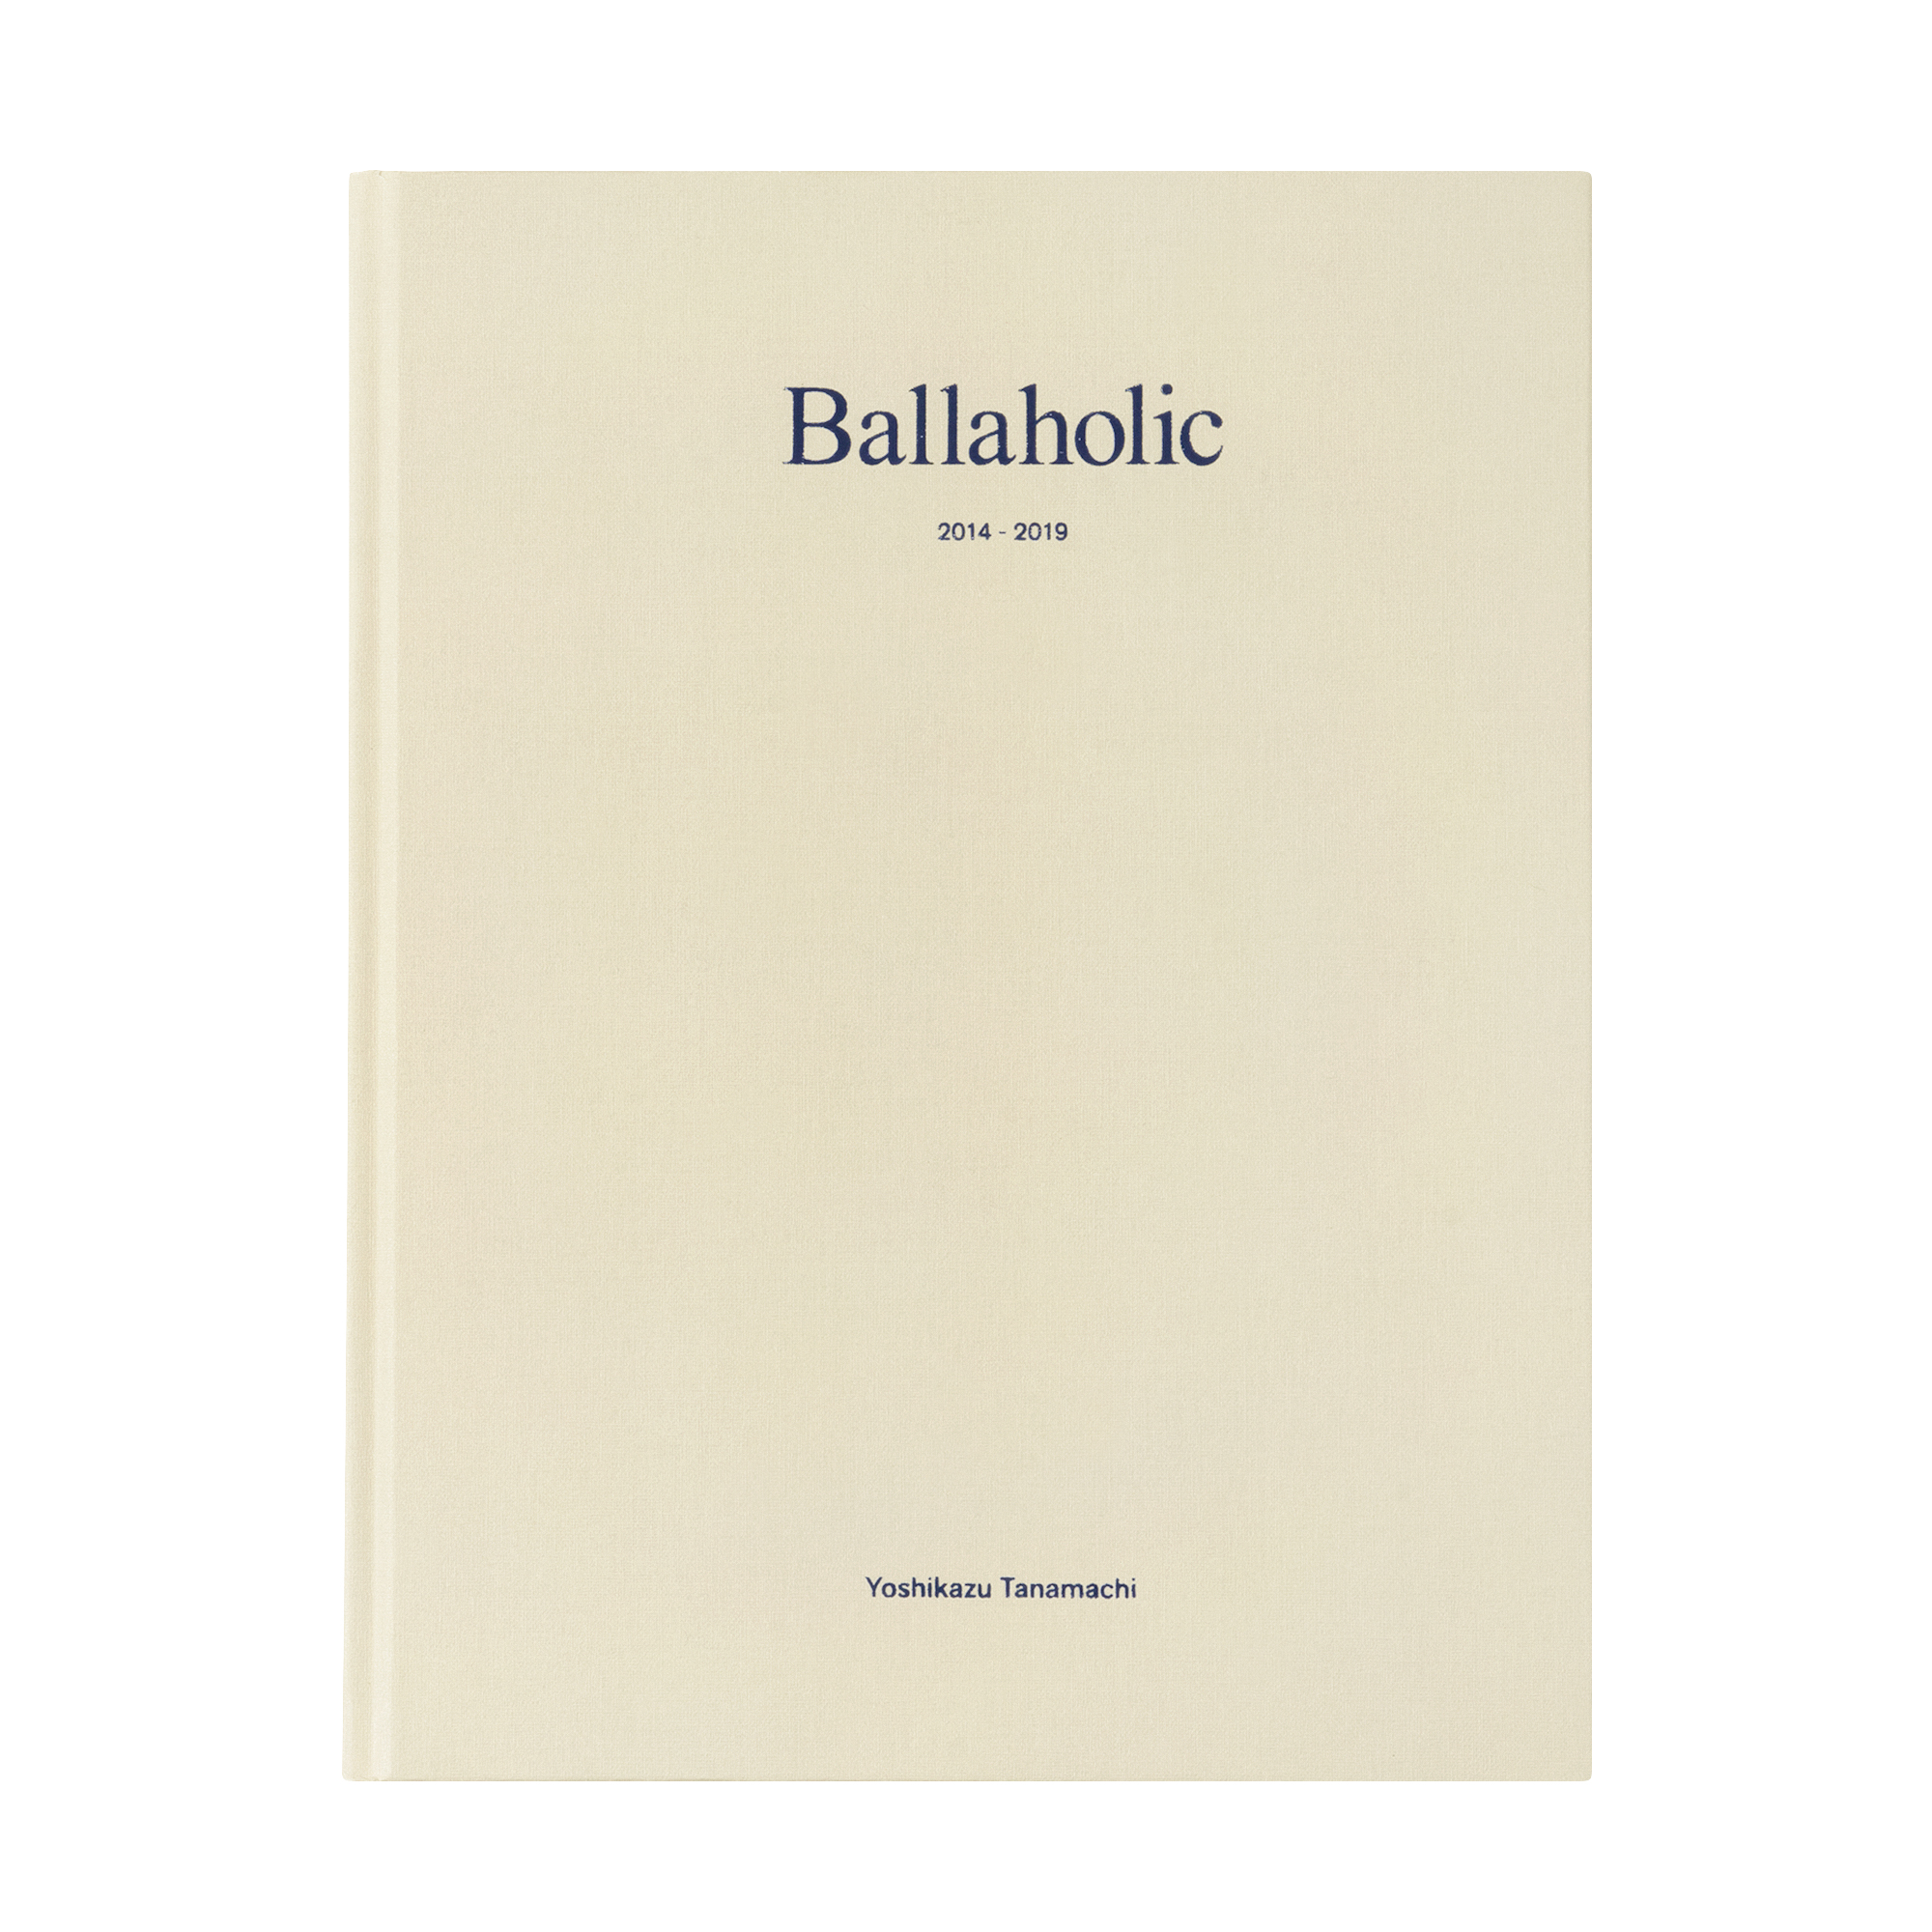 『Ballaholic 2014-2019』